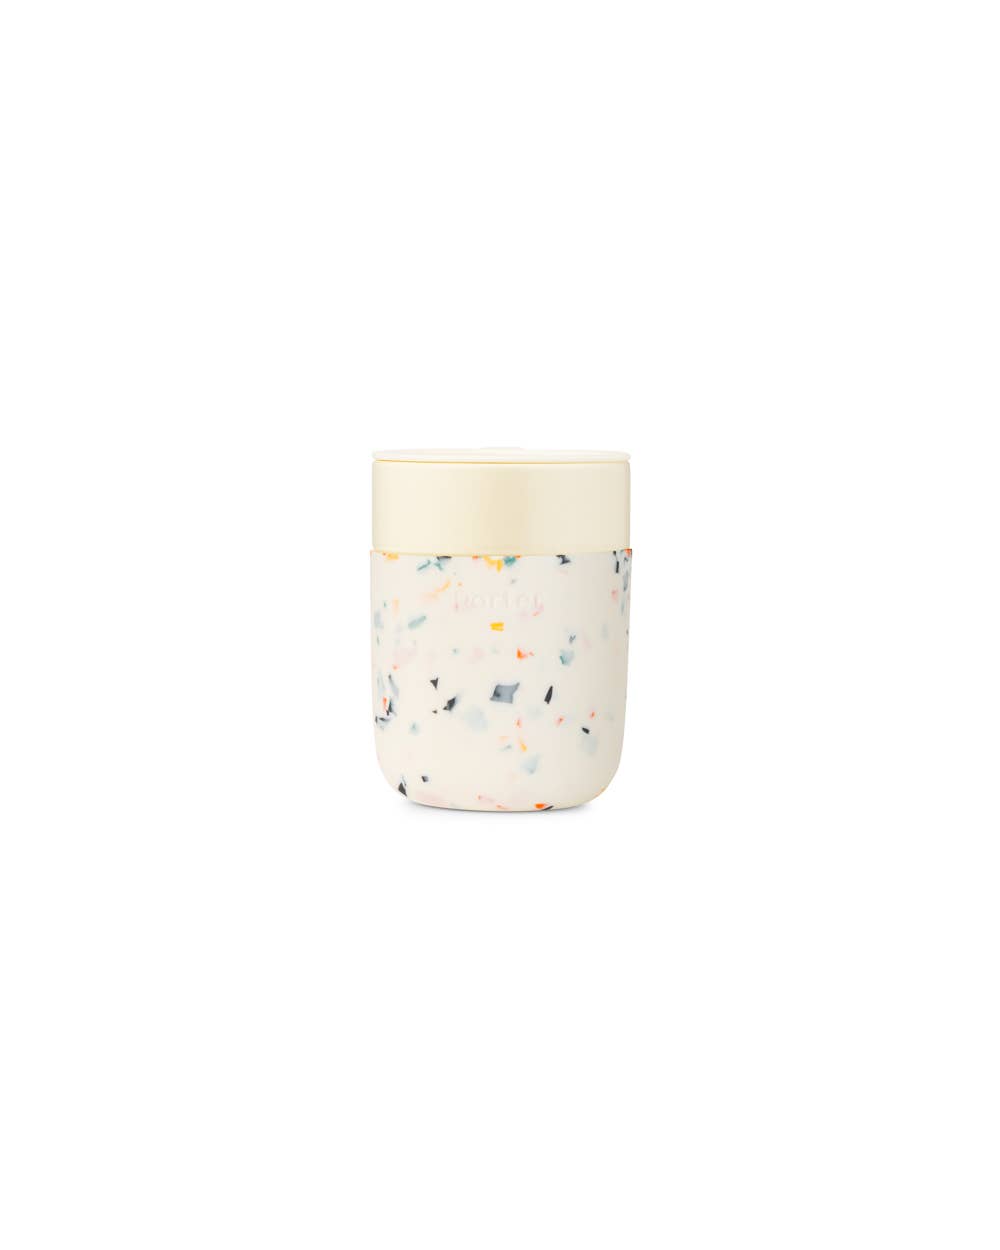 W&P Porter Ceramic Mug w/ Protective Silicone Sleeve, Cream 12